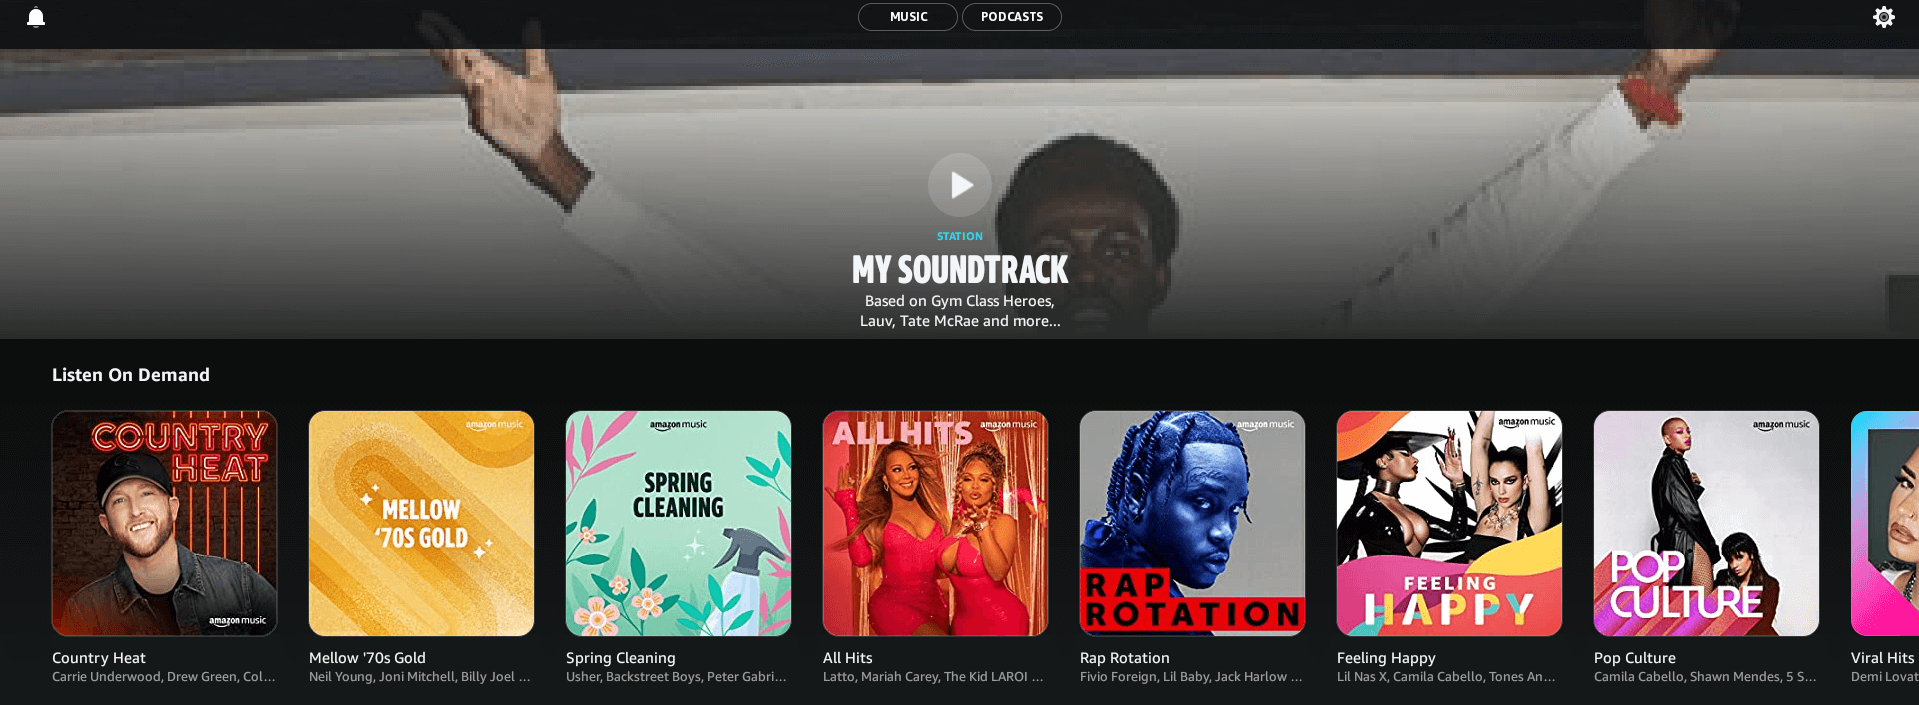 Amazon Music app user interface